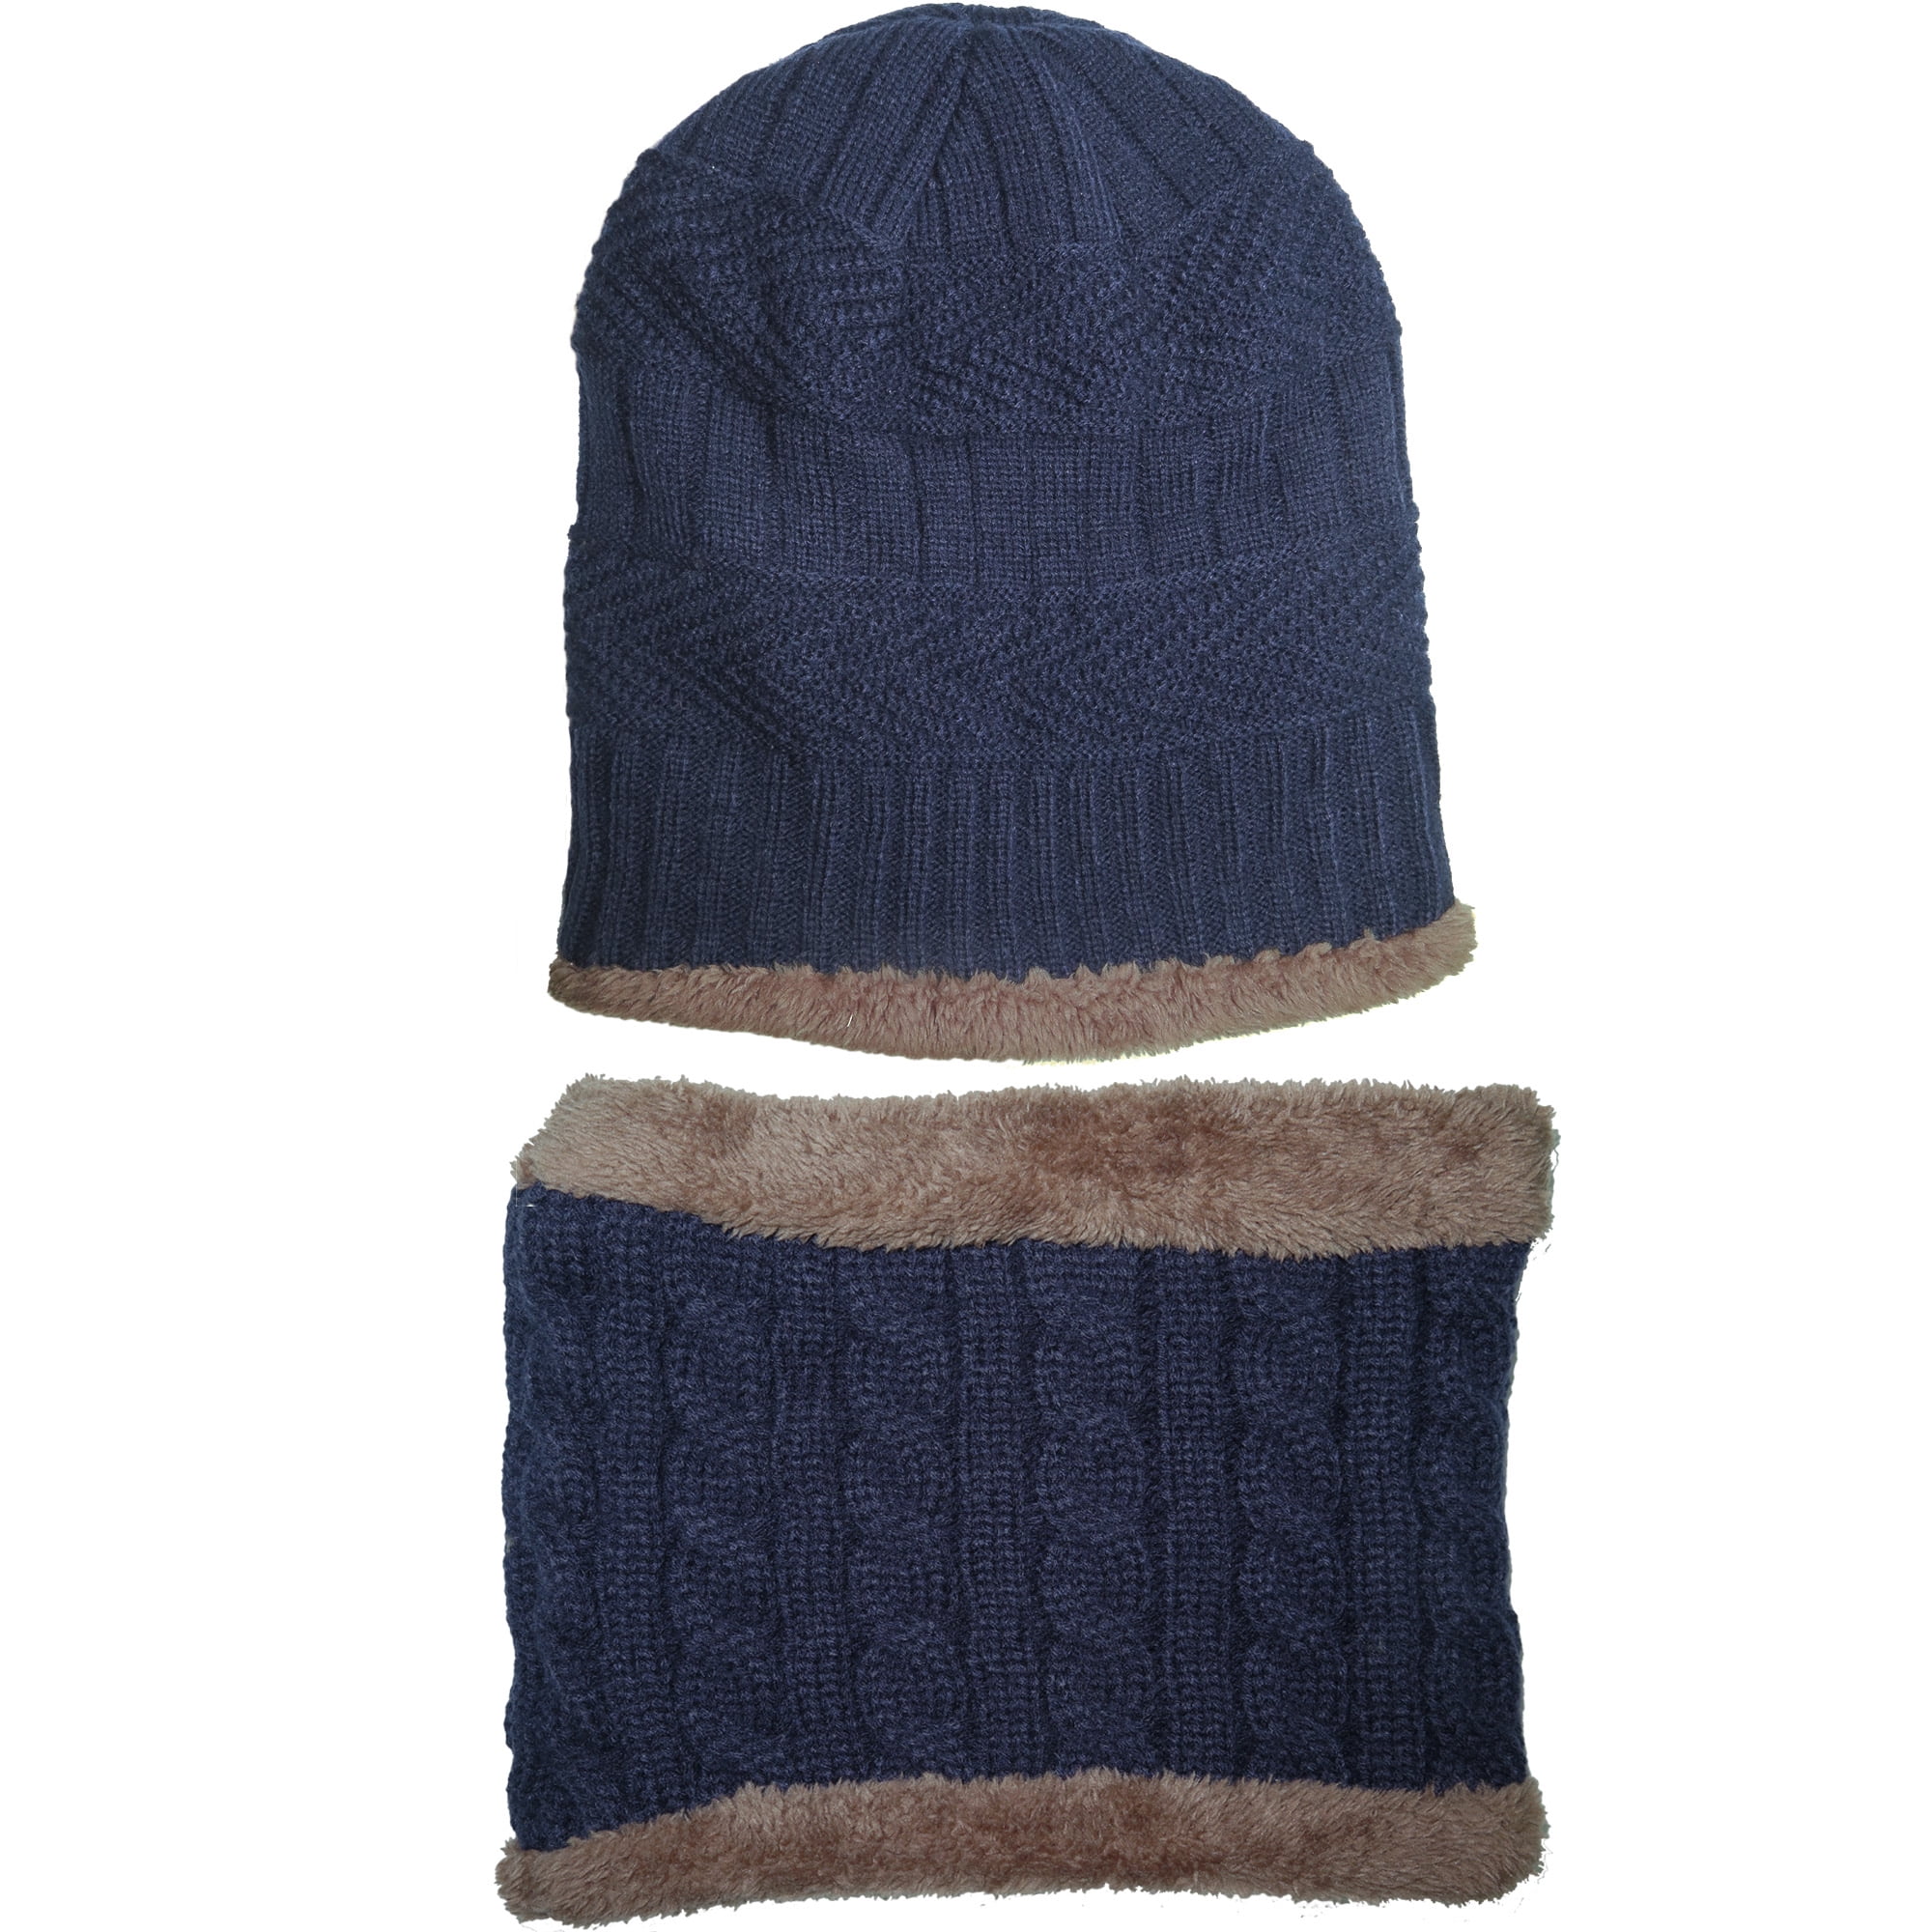 Zlolia Women & Men Winter Warm Stretch Knitted Cap Beanie Hats Headband Skullies & Beanies 